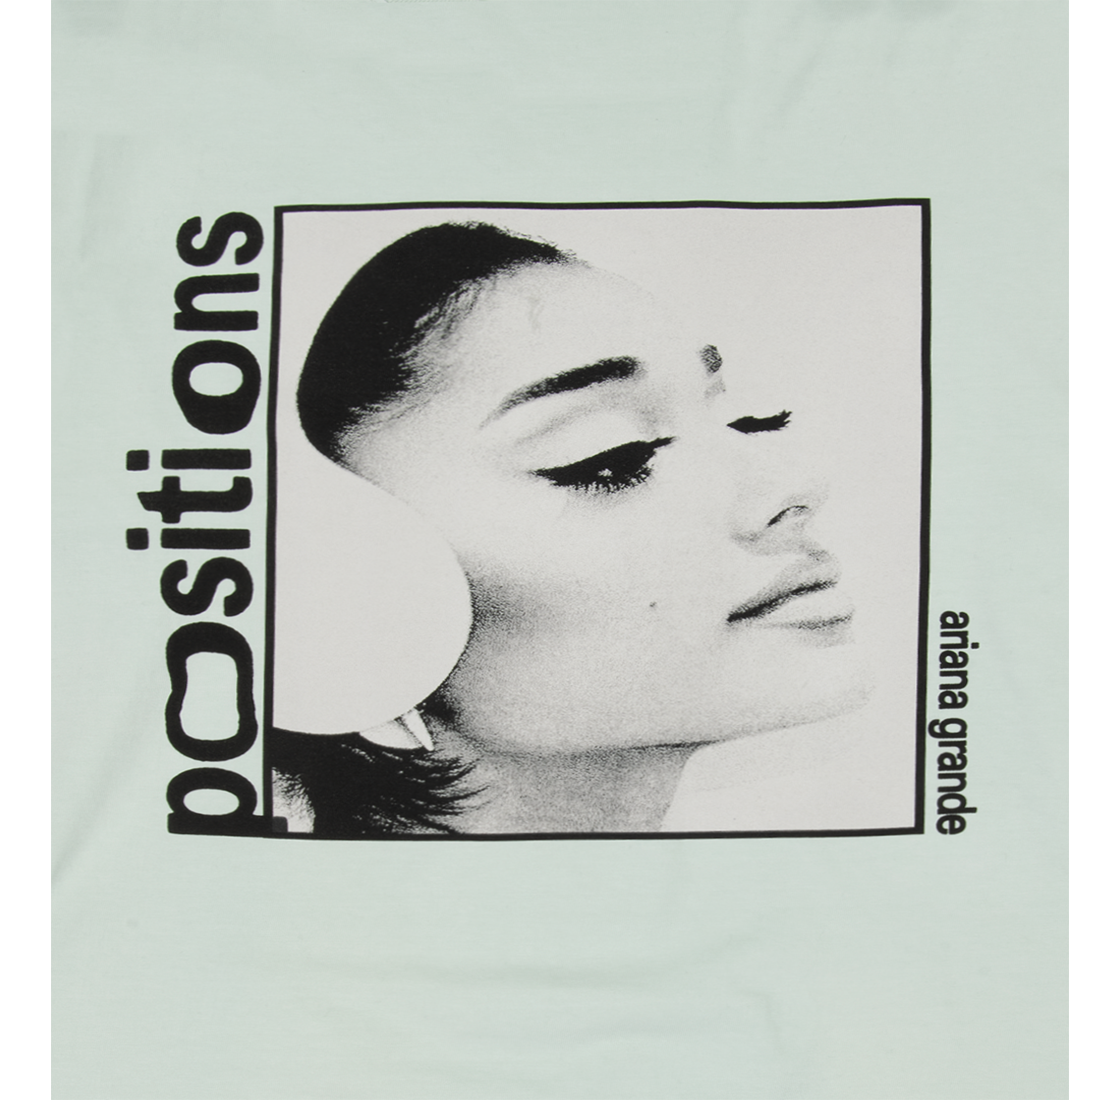 Ariana Grande - positions photo longsleeve t-shirt ii